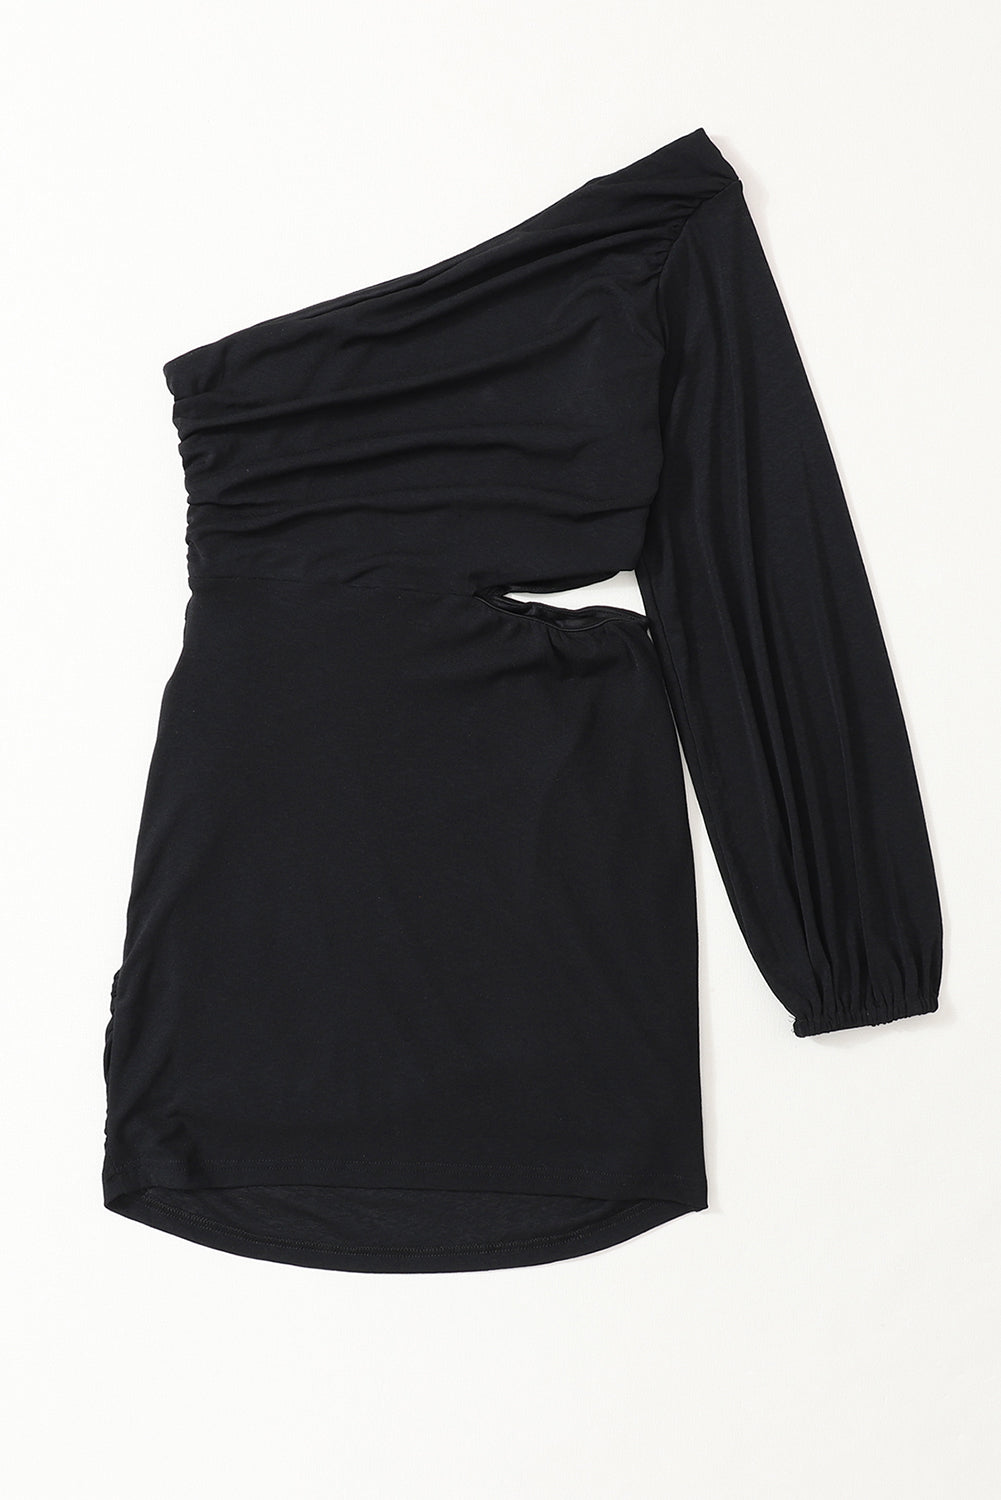 Črna asimetrična oprijeta obleka z izrezom na enem ramenu